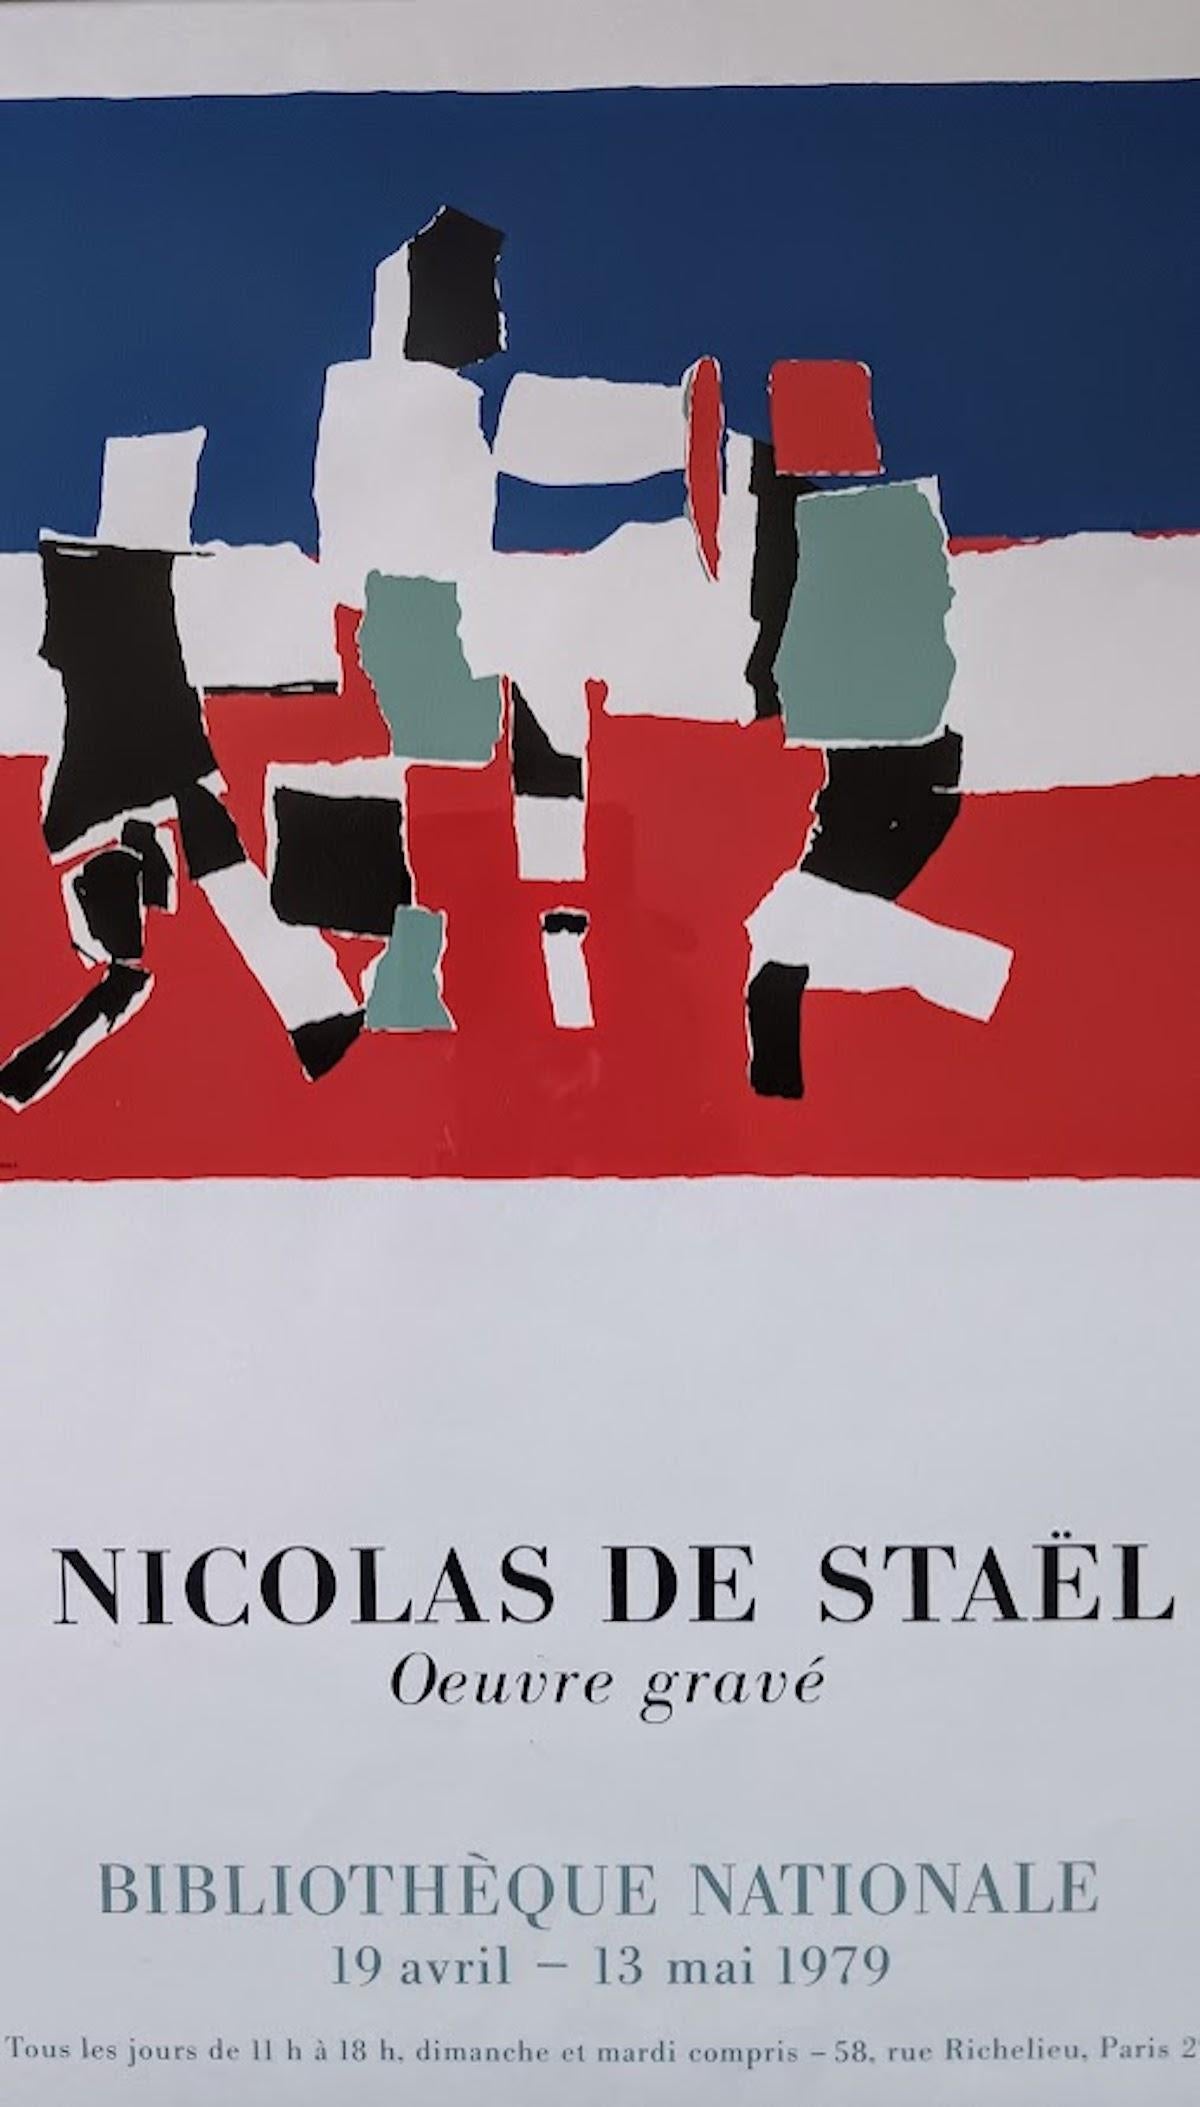 Nicolas DE STAEL, Oeuvre gravé, Bibliotheque Nationale Exhibition, 1979
Original print poster, size is framed 
Excellent condition
